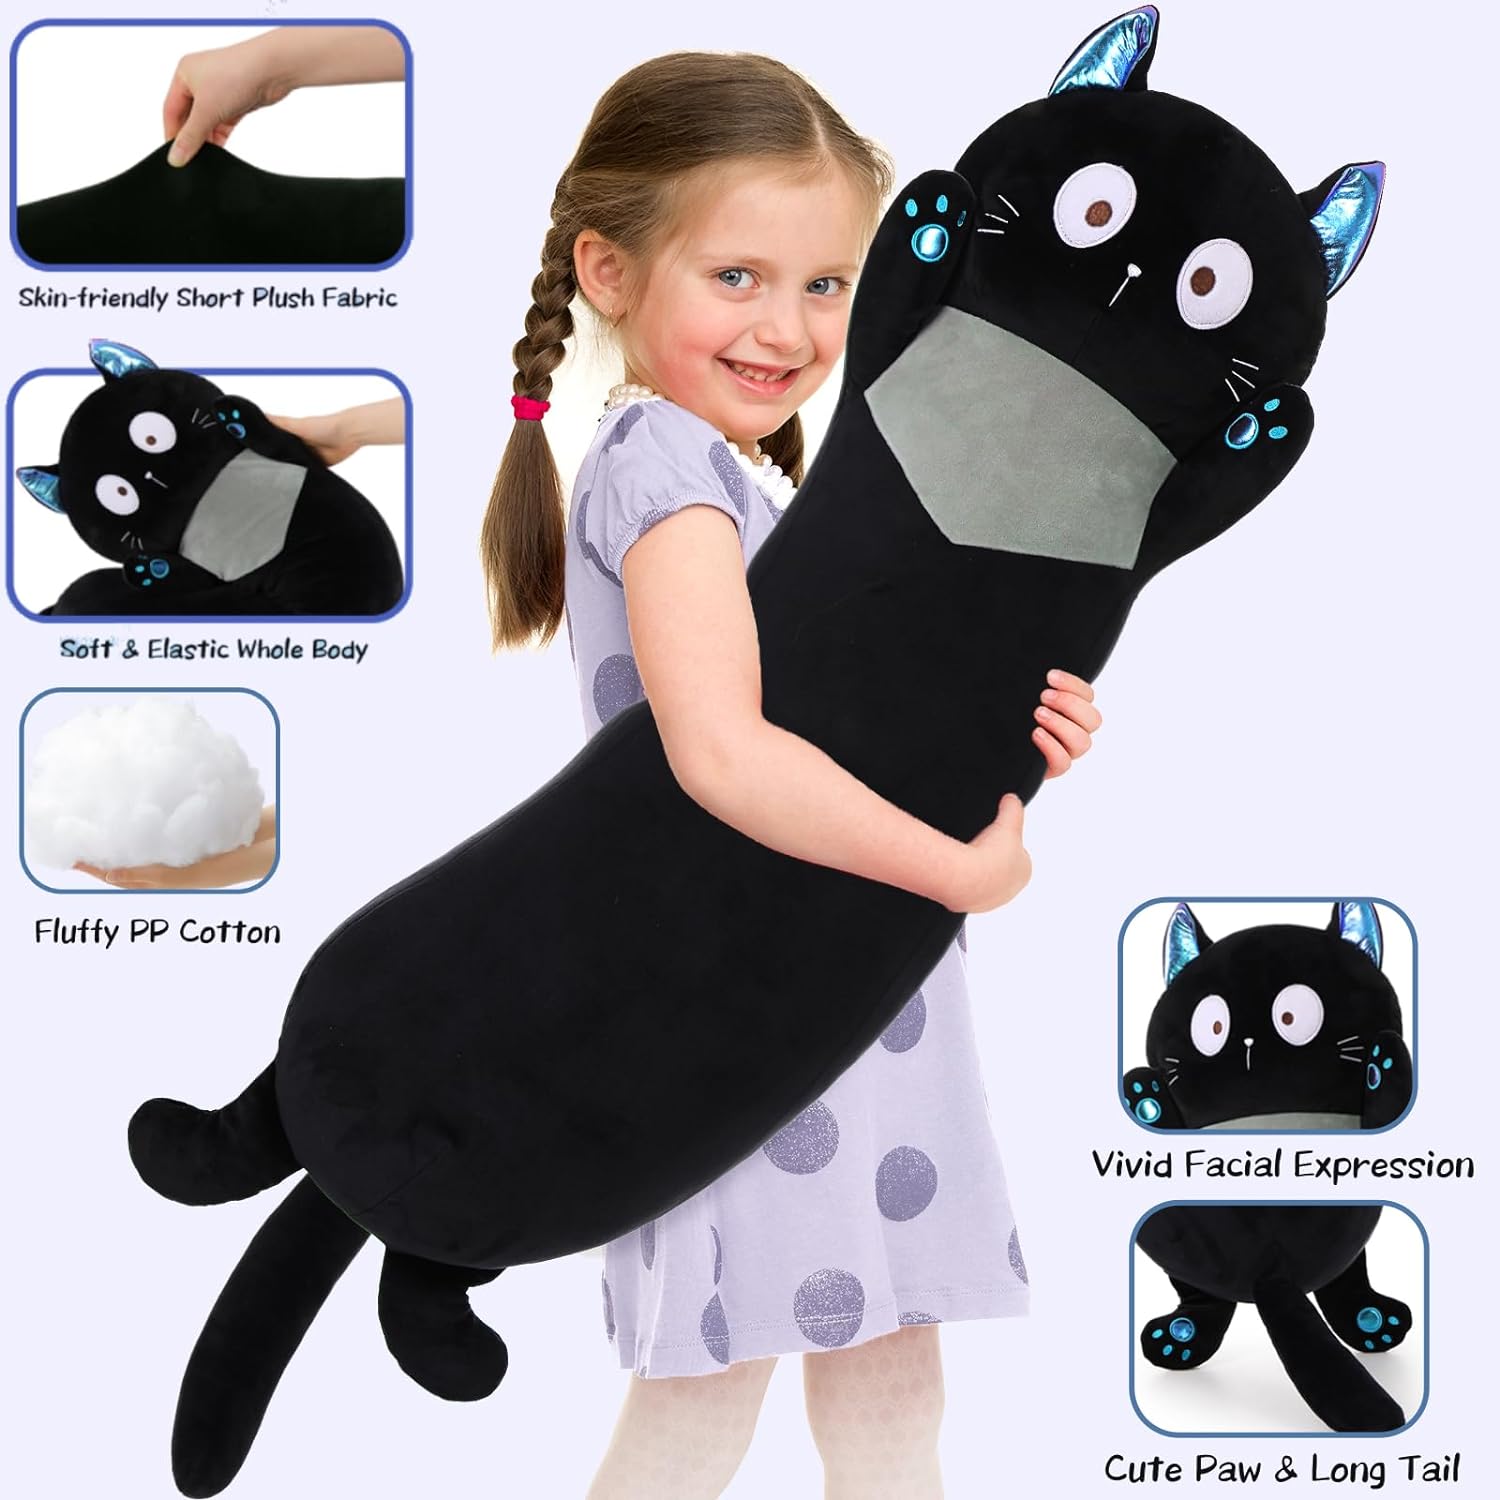 Black Cat Stuffed Animals Cat Long Throw Pillow, 39 Inches